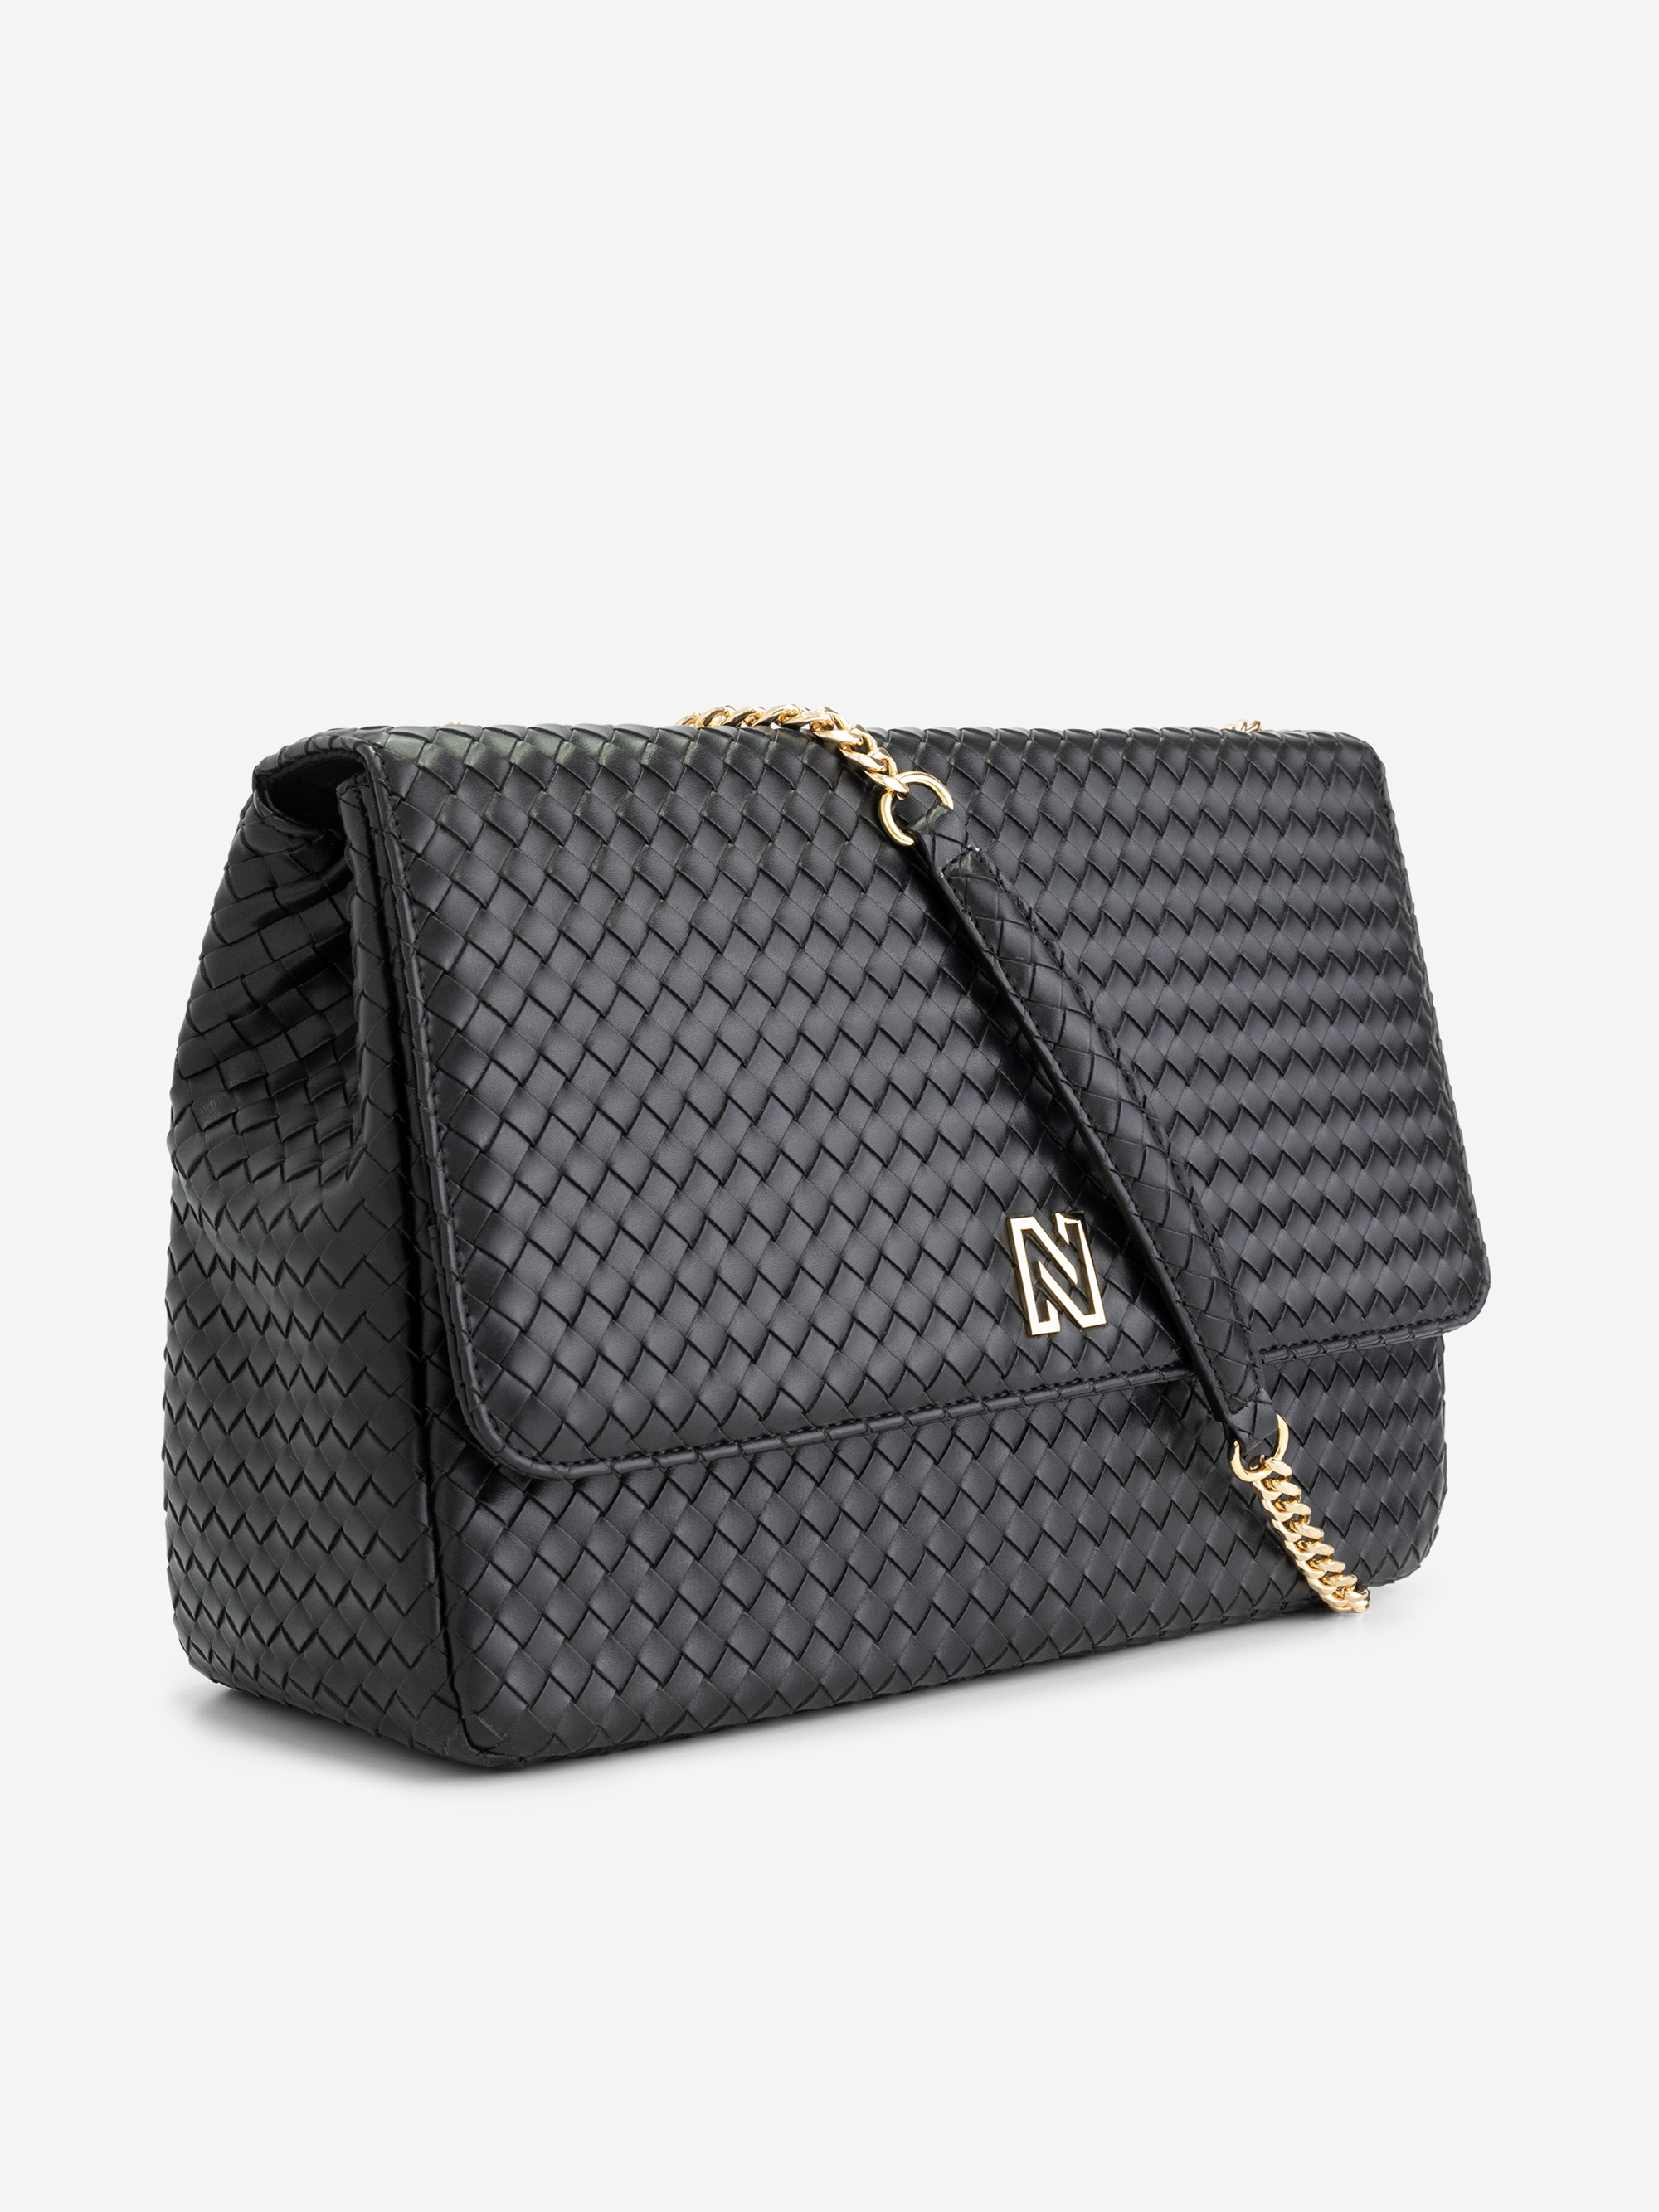 Avril Braided Bag